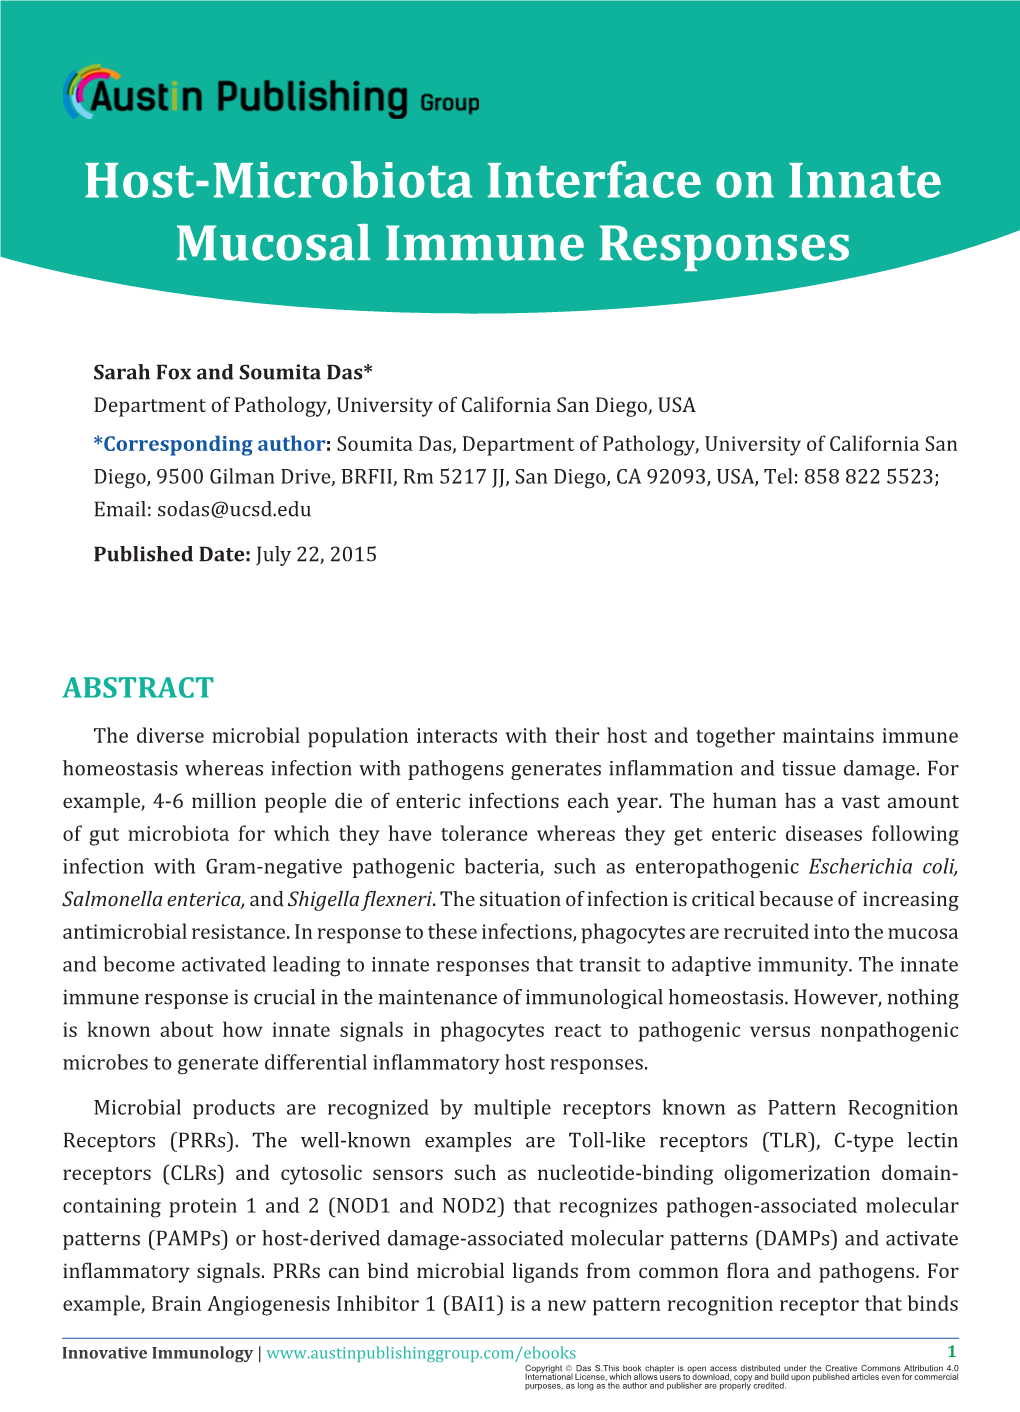 Host-Microbiota Interface on Innate Mucosal Immune Responses